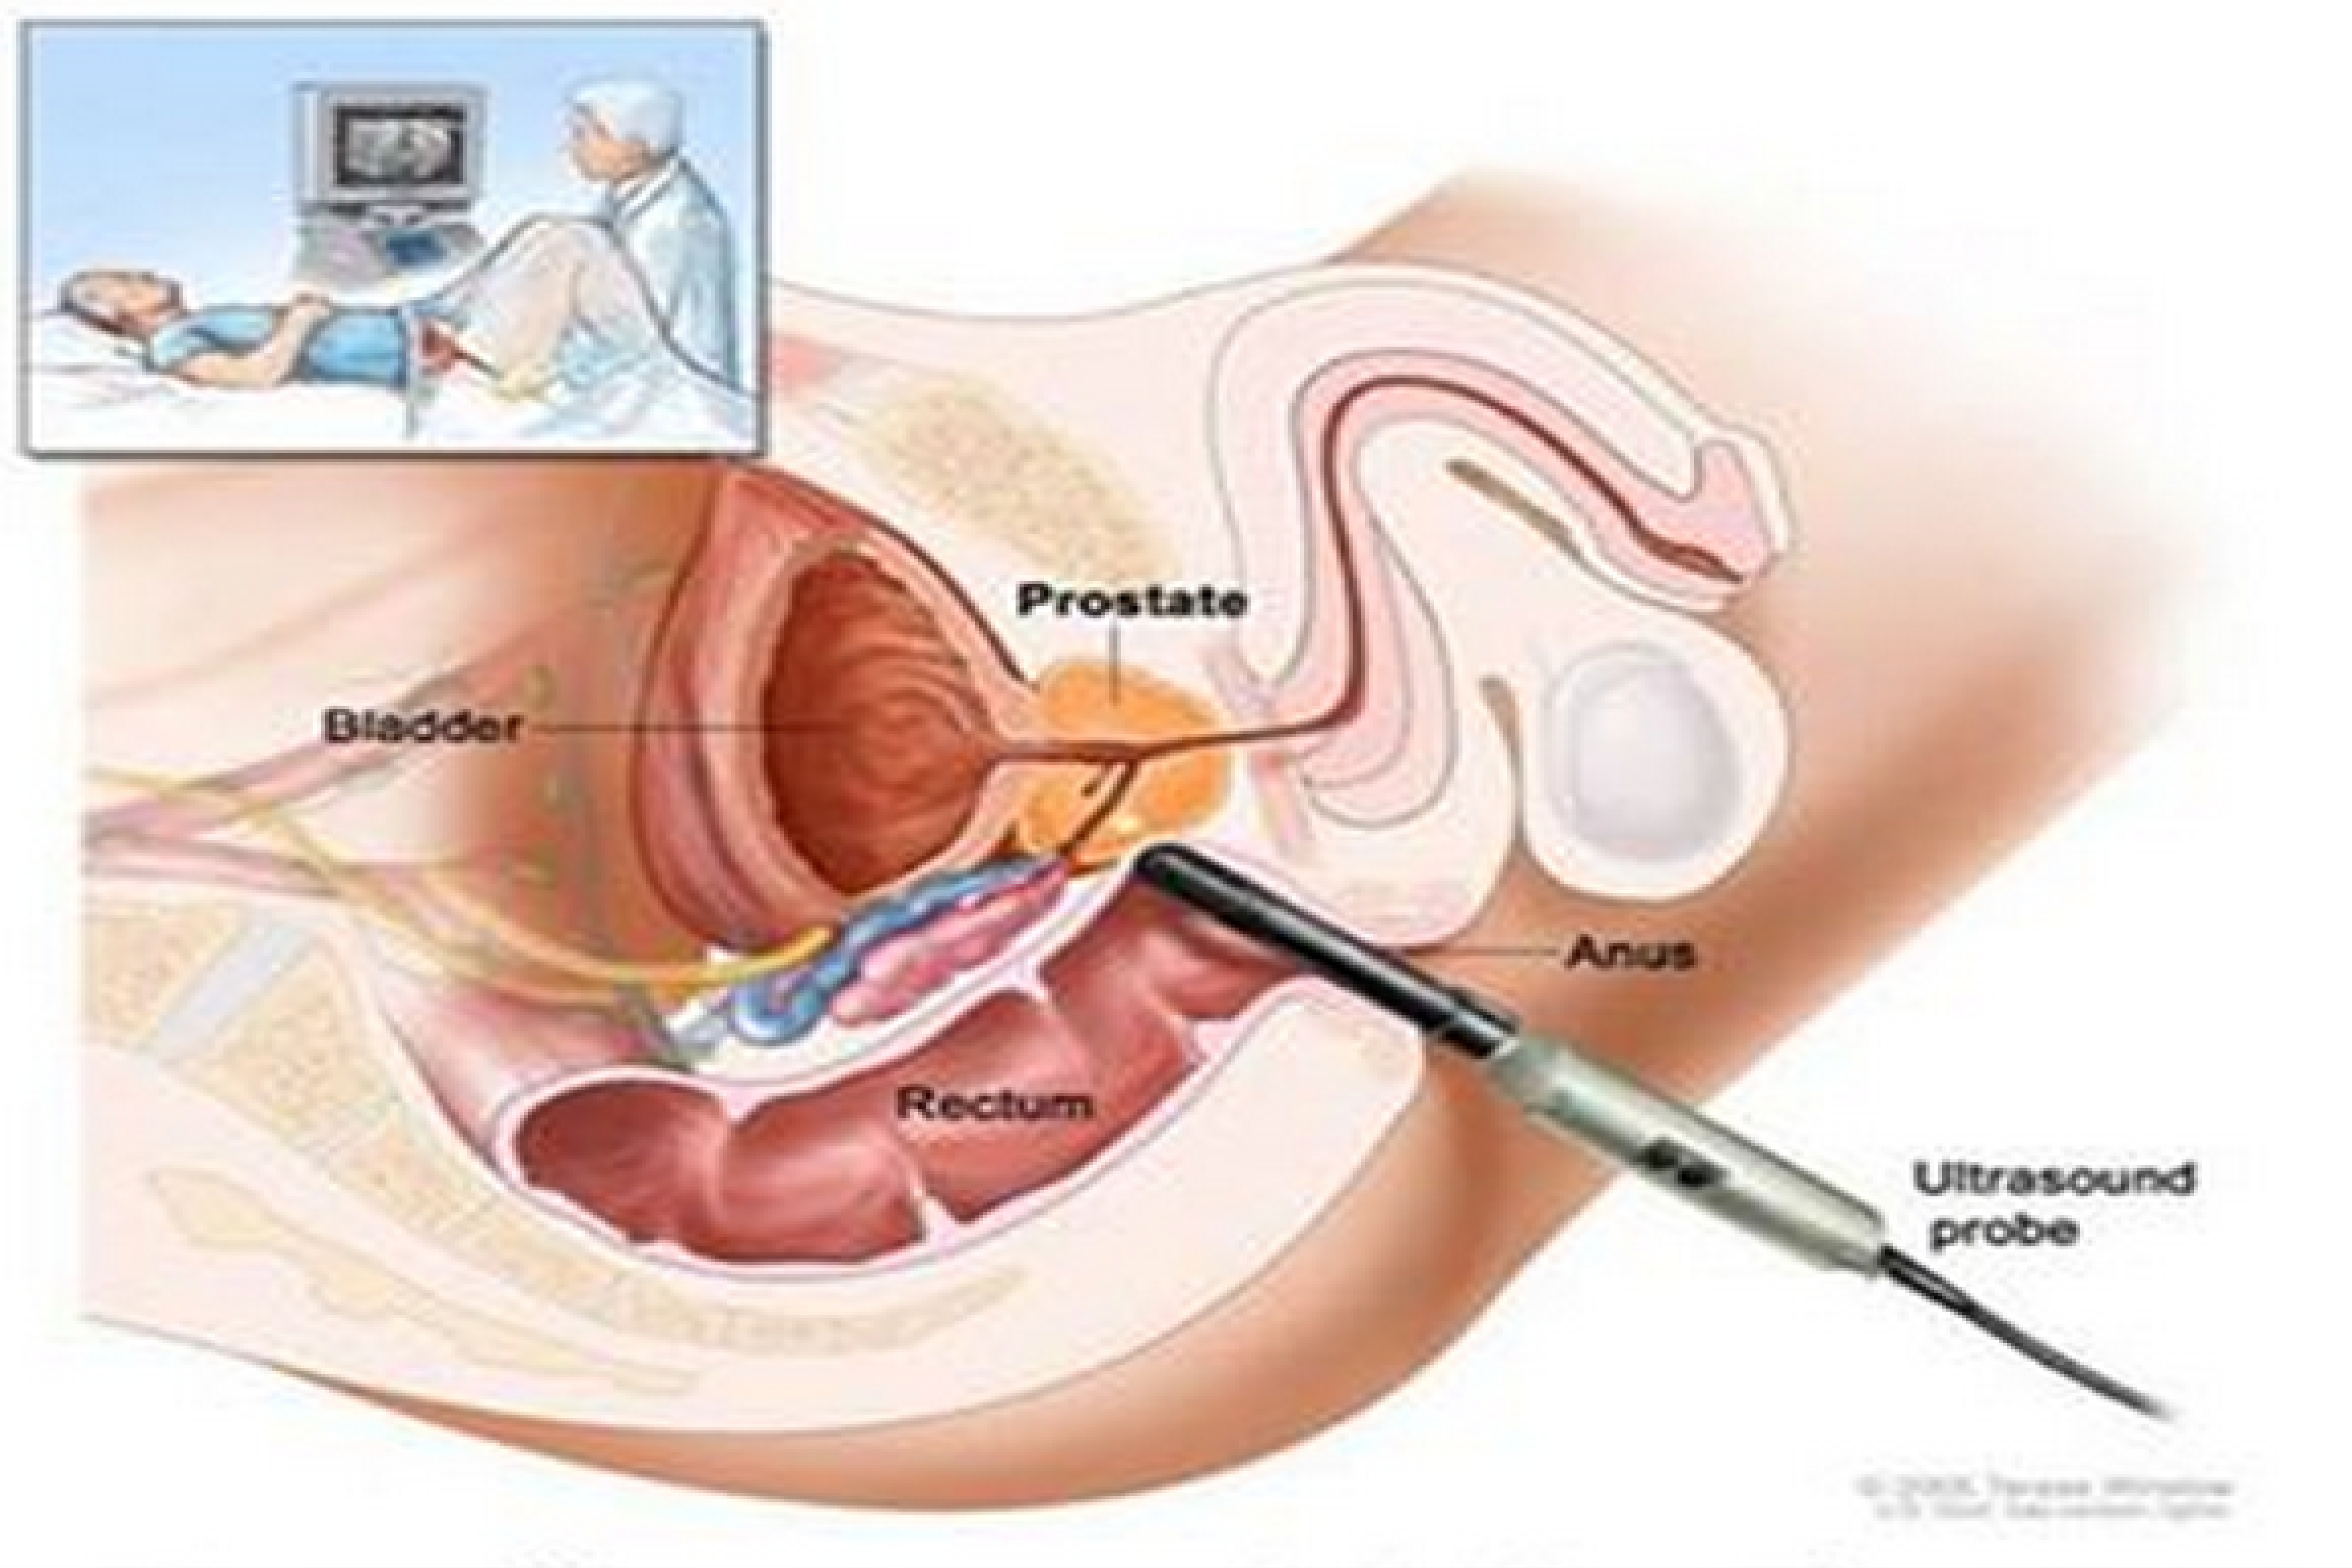 ecografia prostata transrectal